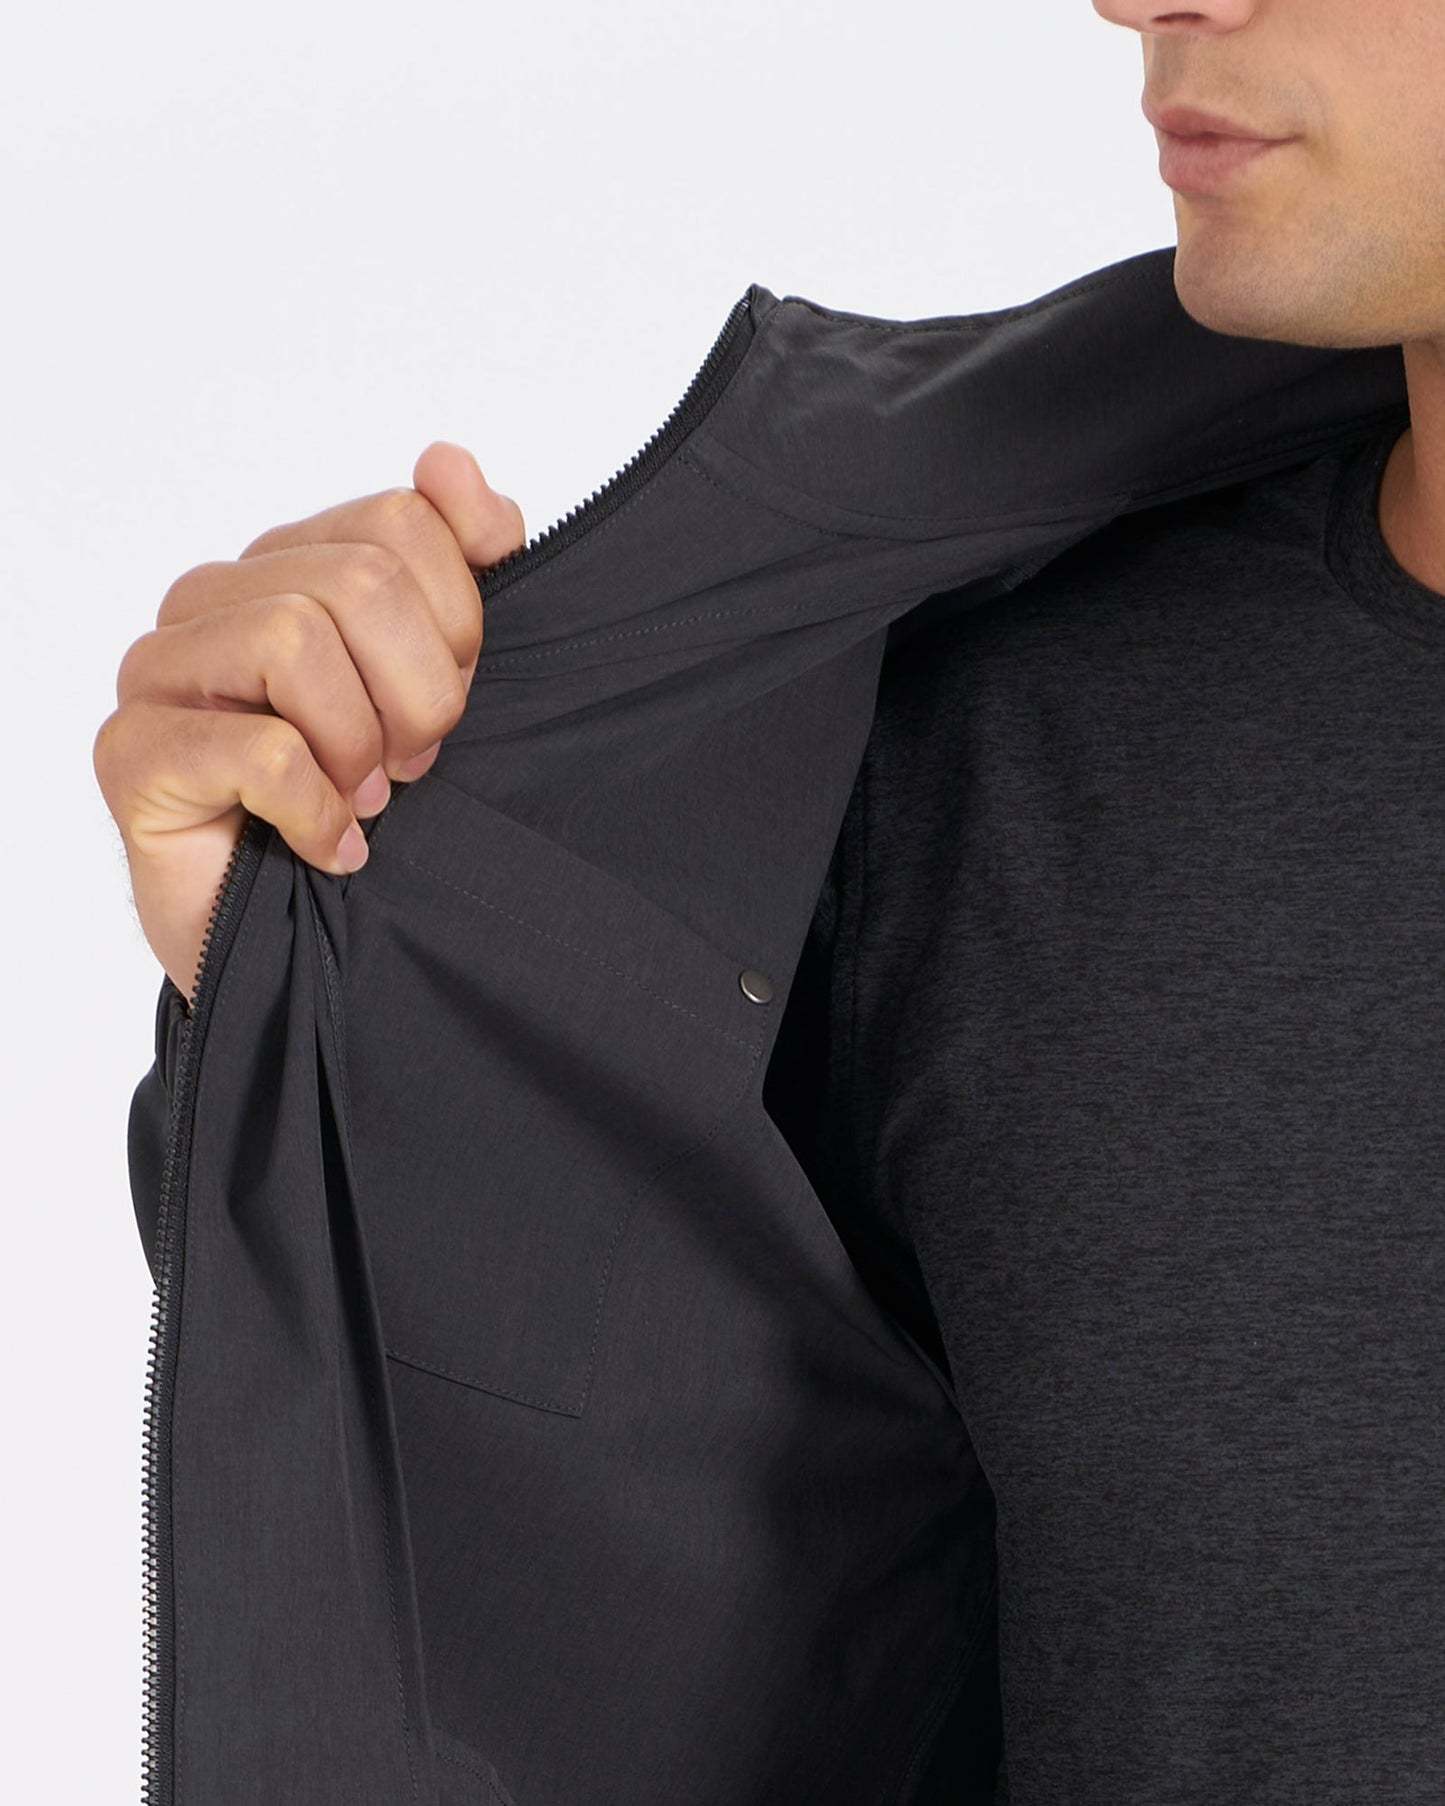 VUORI Venture Track Jacket  (Men's)- Black Linen Texture